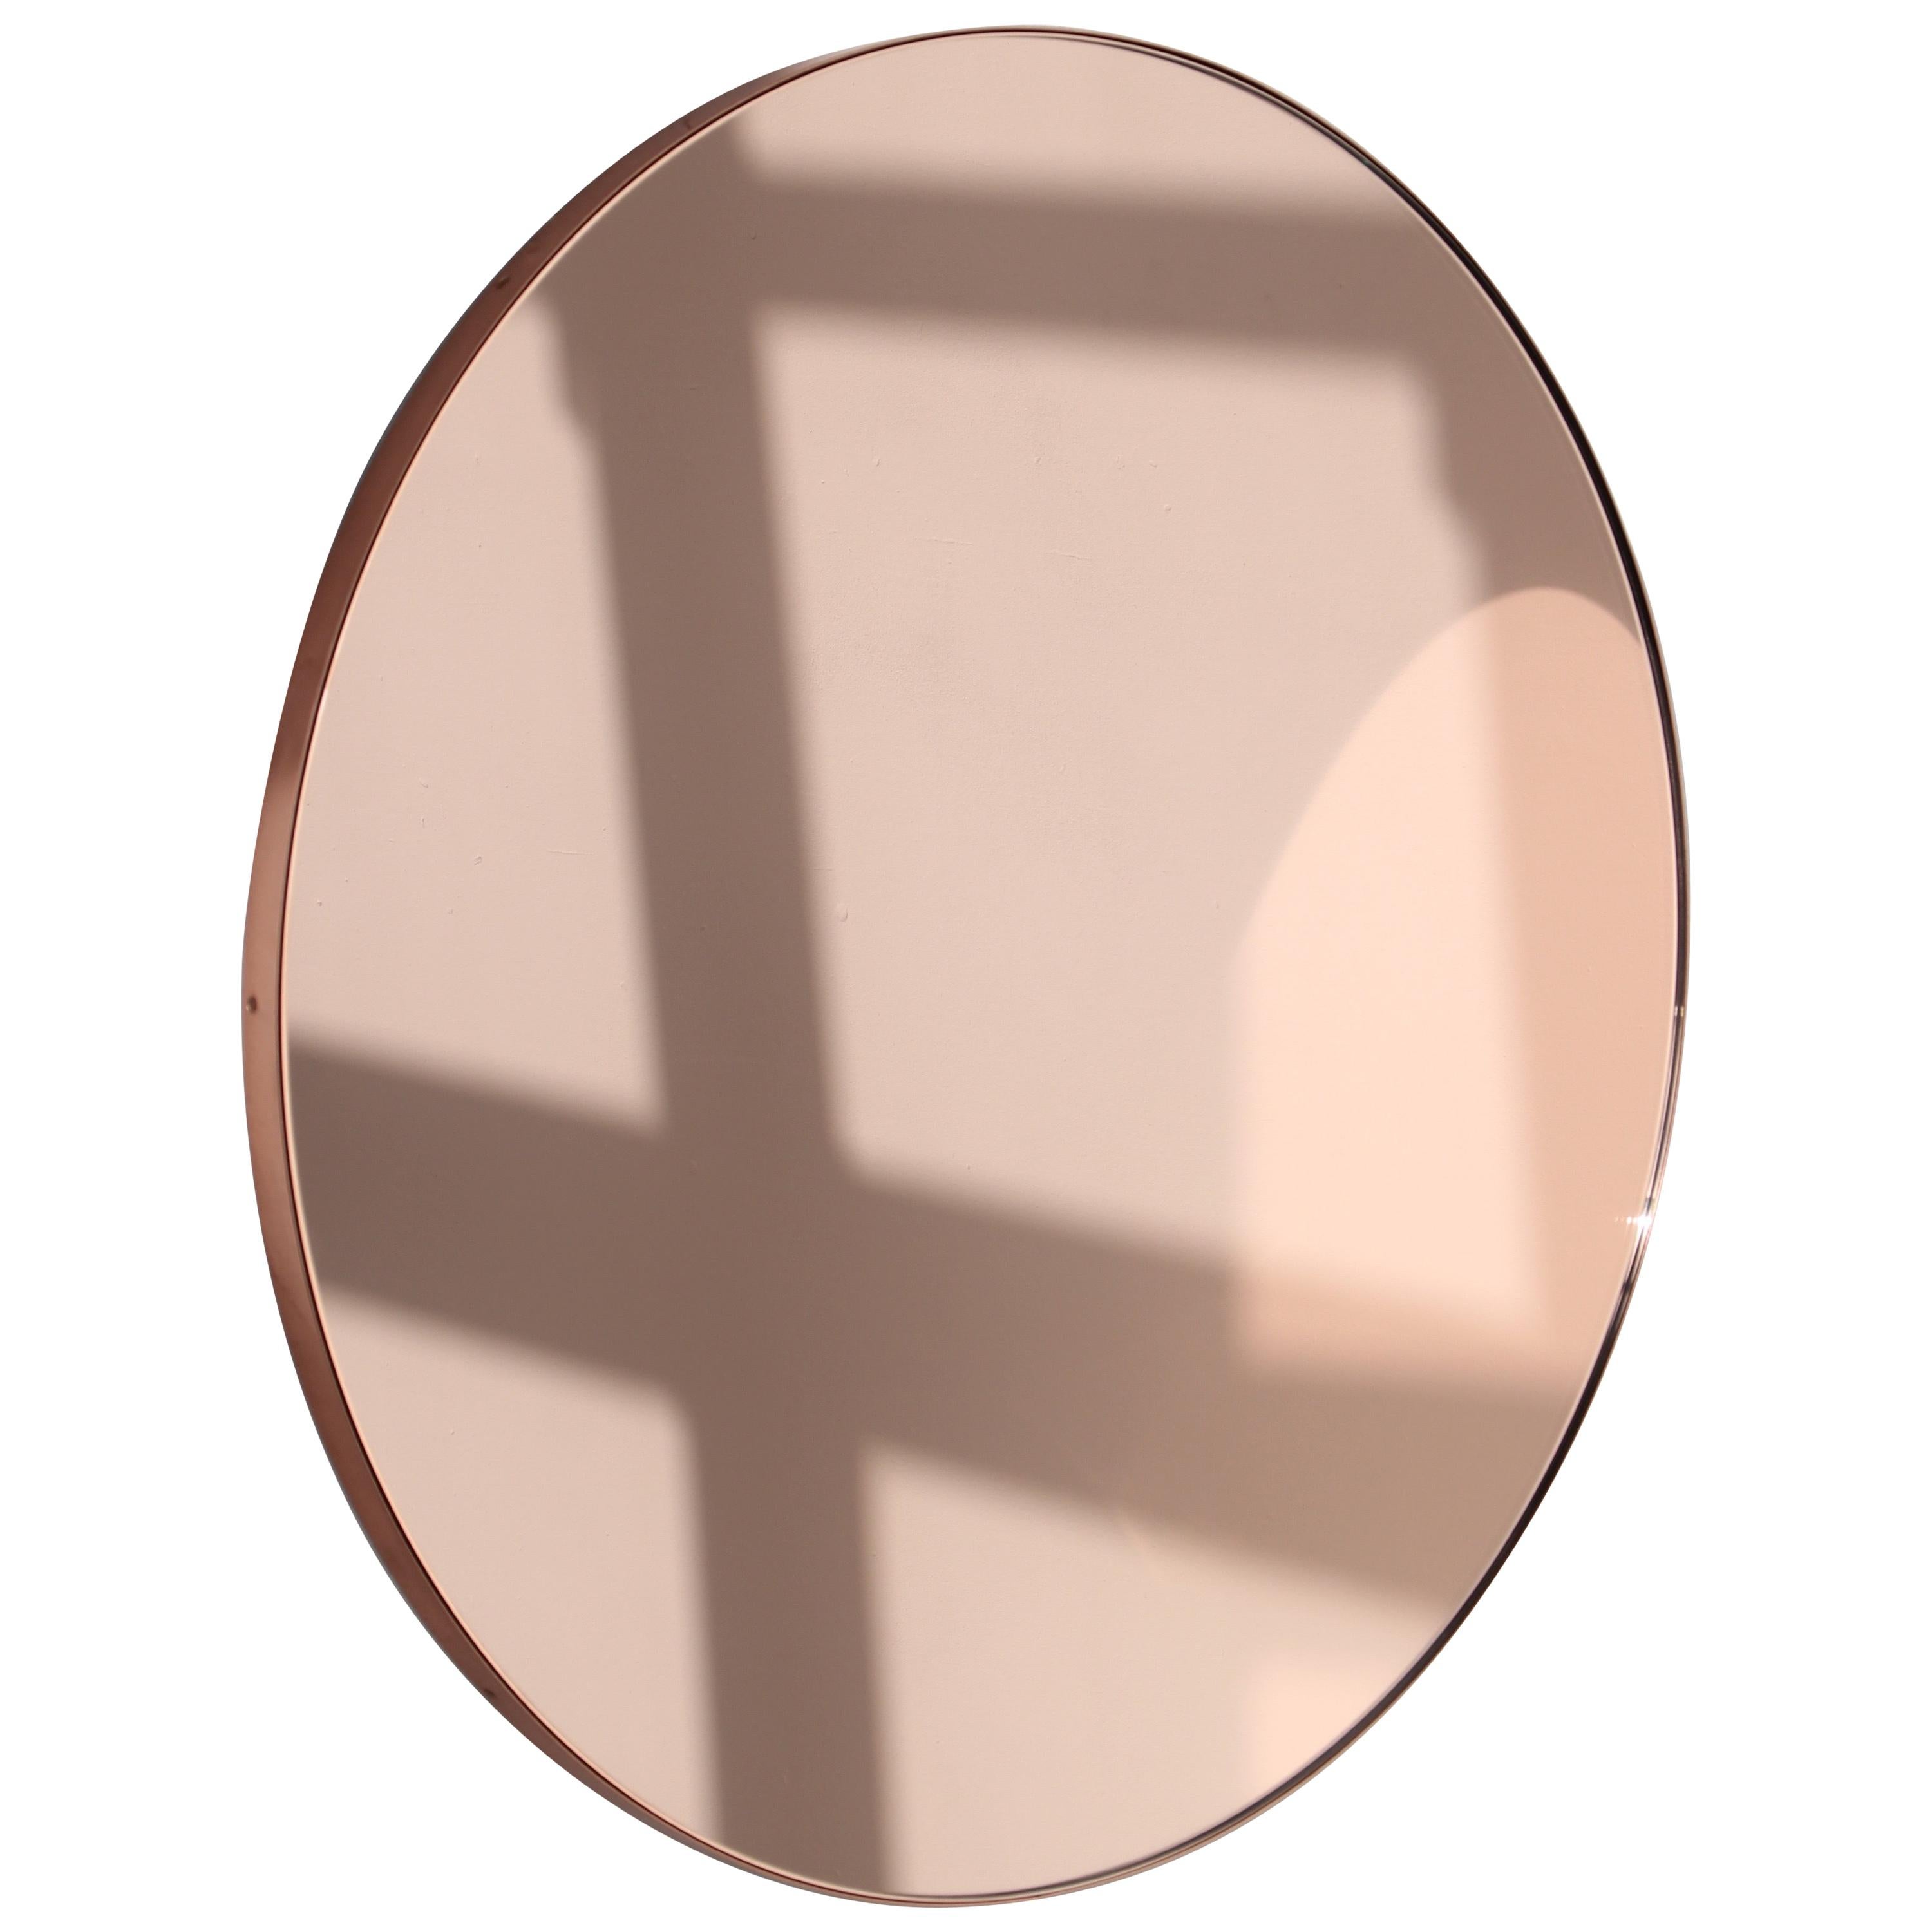 Orbis Rose Gold / Peach Tinted Round Modern Mirror with Copper Frame, Regular